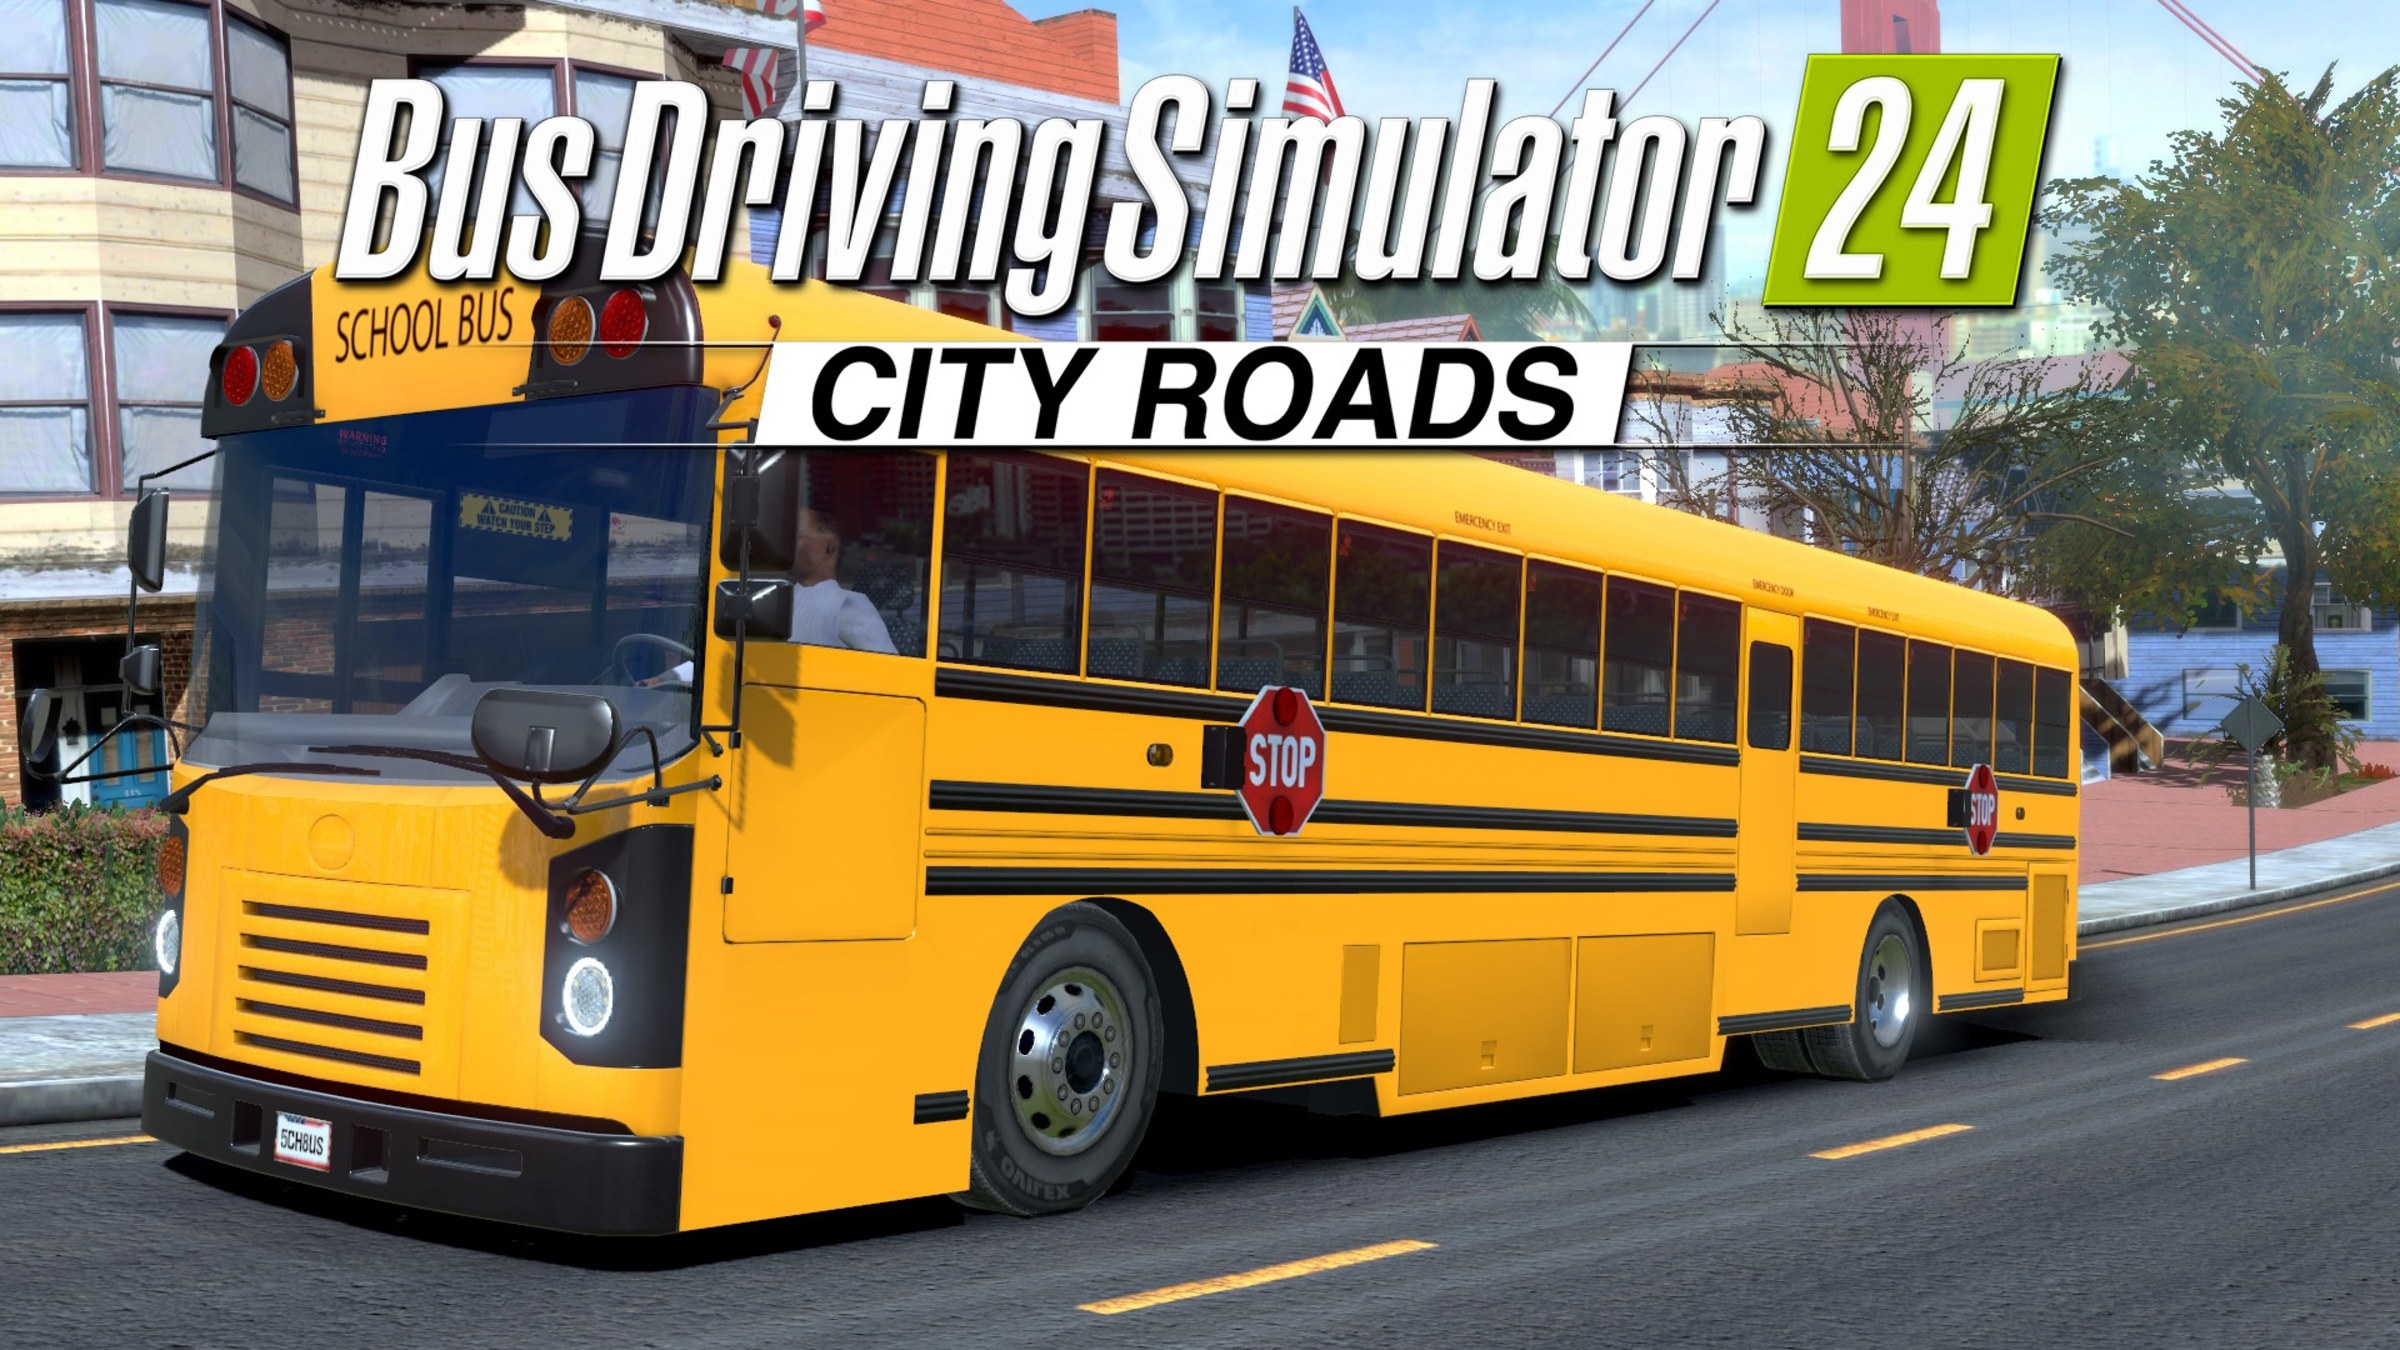 Bus Driving Simulator 24 - City Roads DLC School Bus for Nintendo 